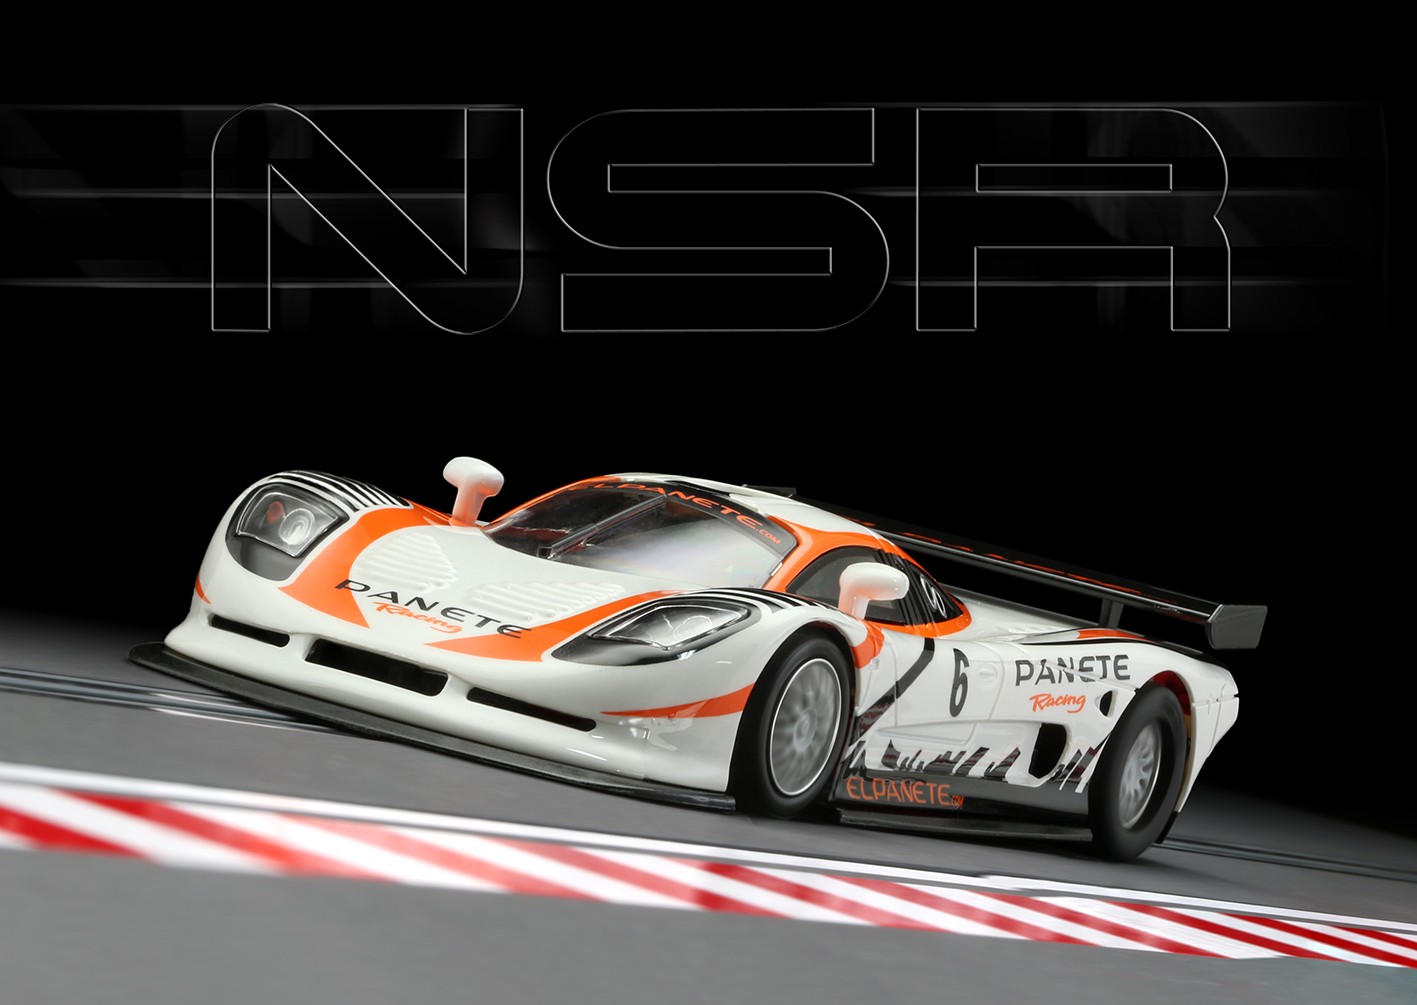 NSR - Mosler MT900R Panete Racing - Orange #6, 0137SW-EVO5